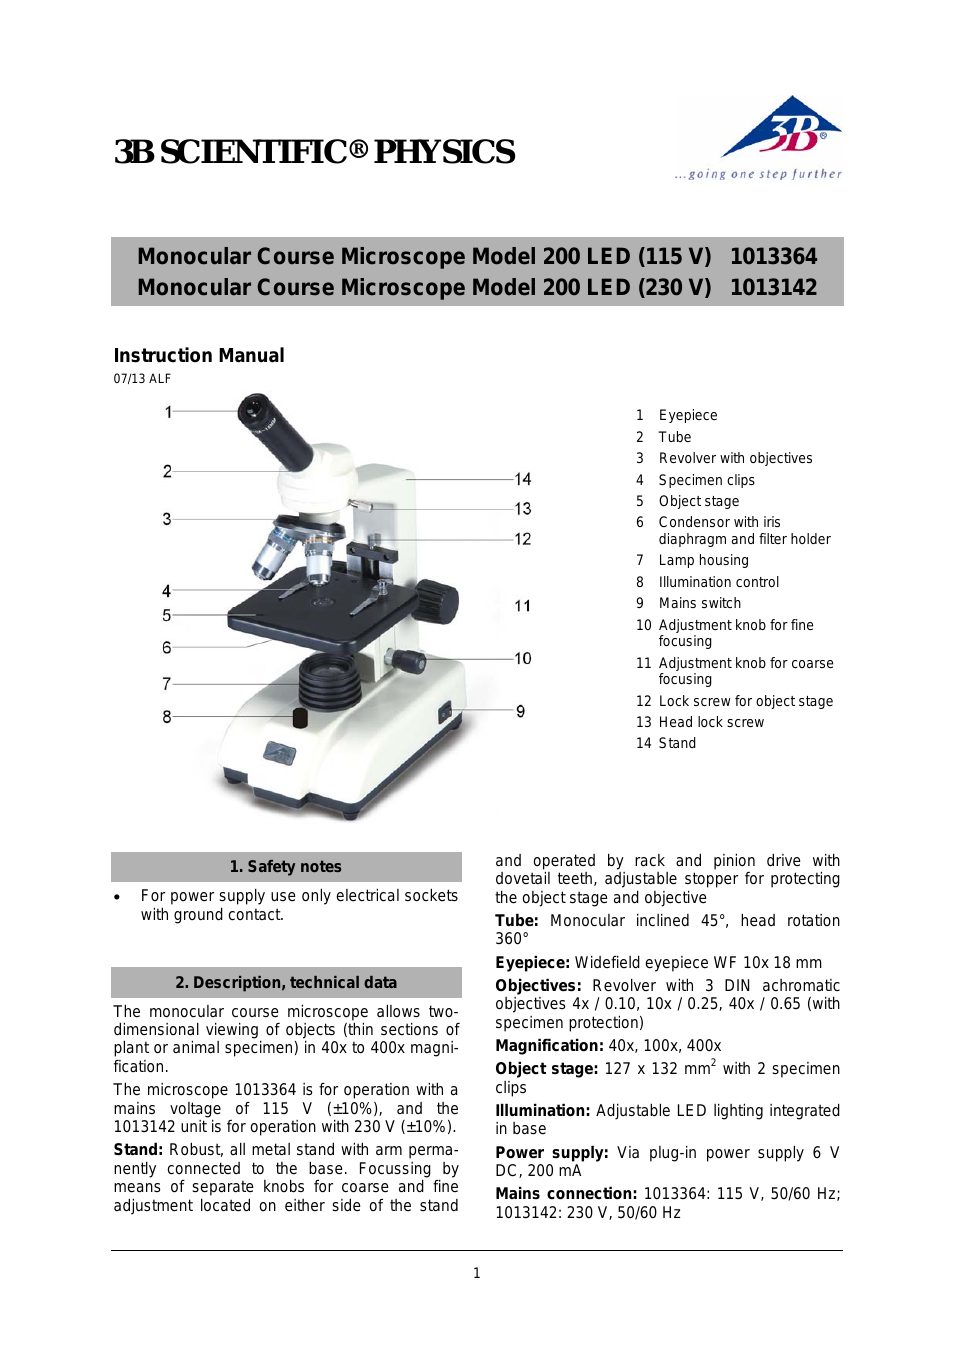 Monocular Course Microscope Model 200 LED (230 V, 50__60 Hz)